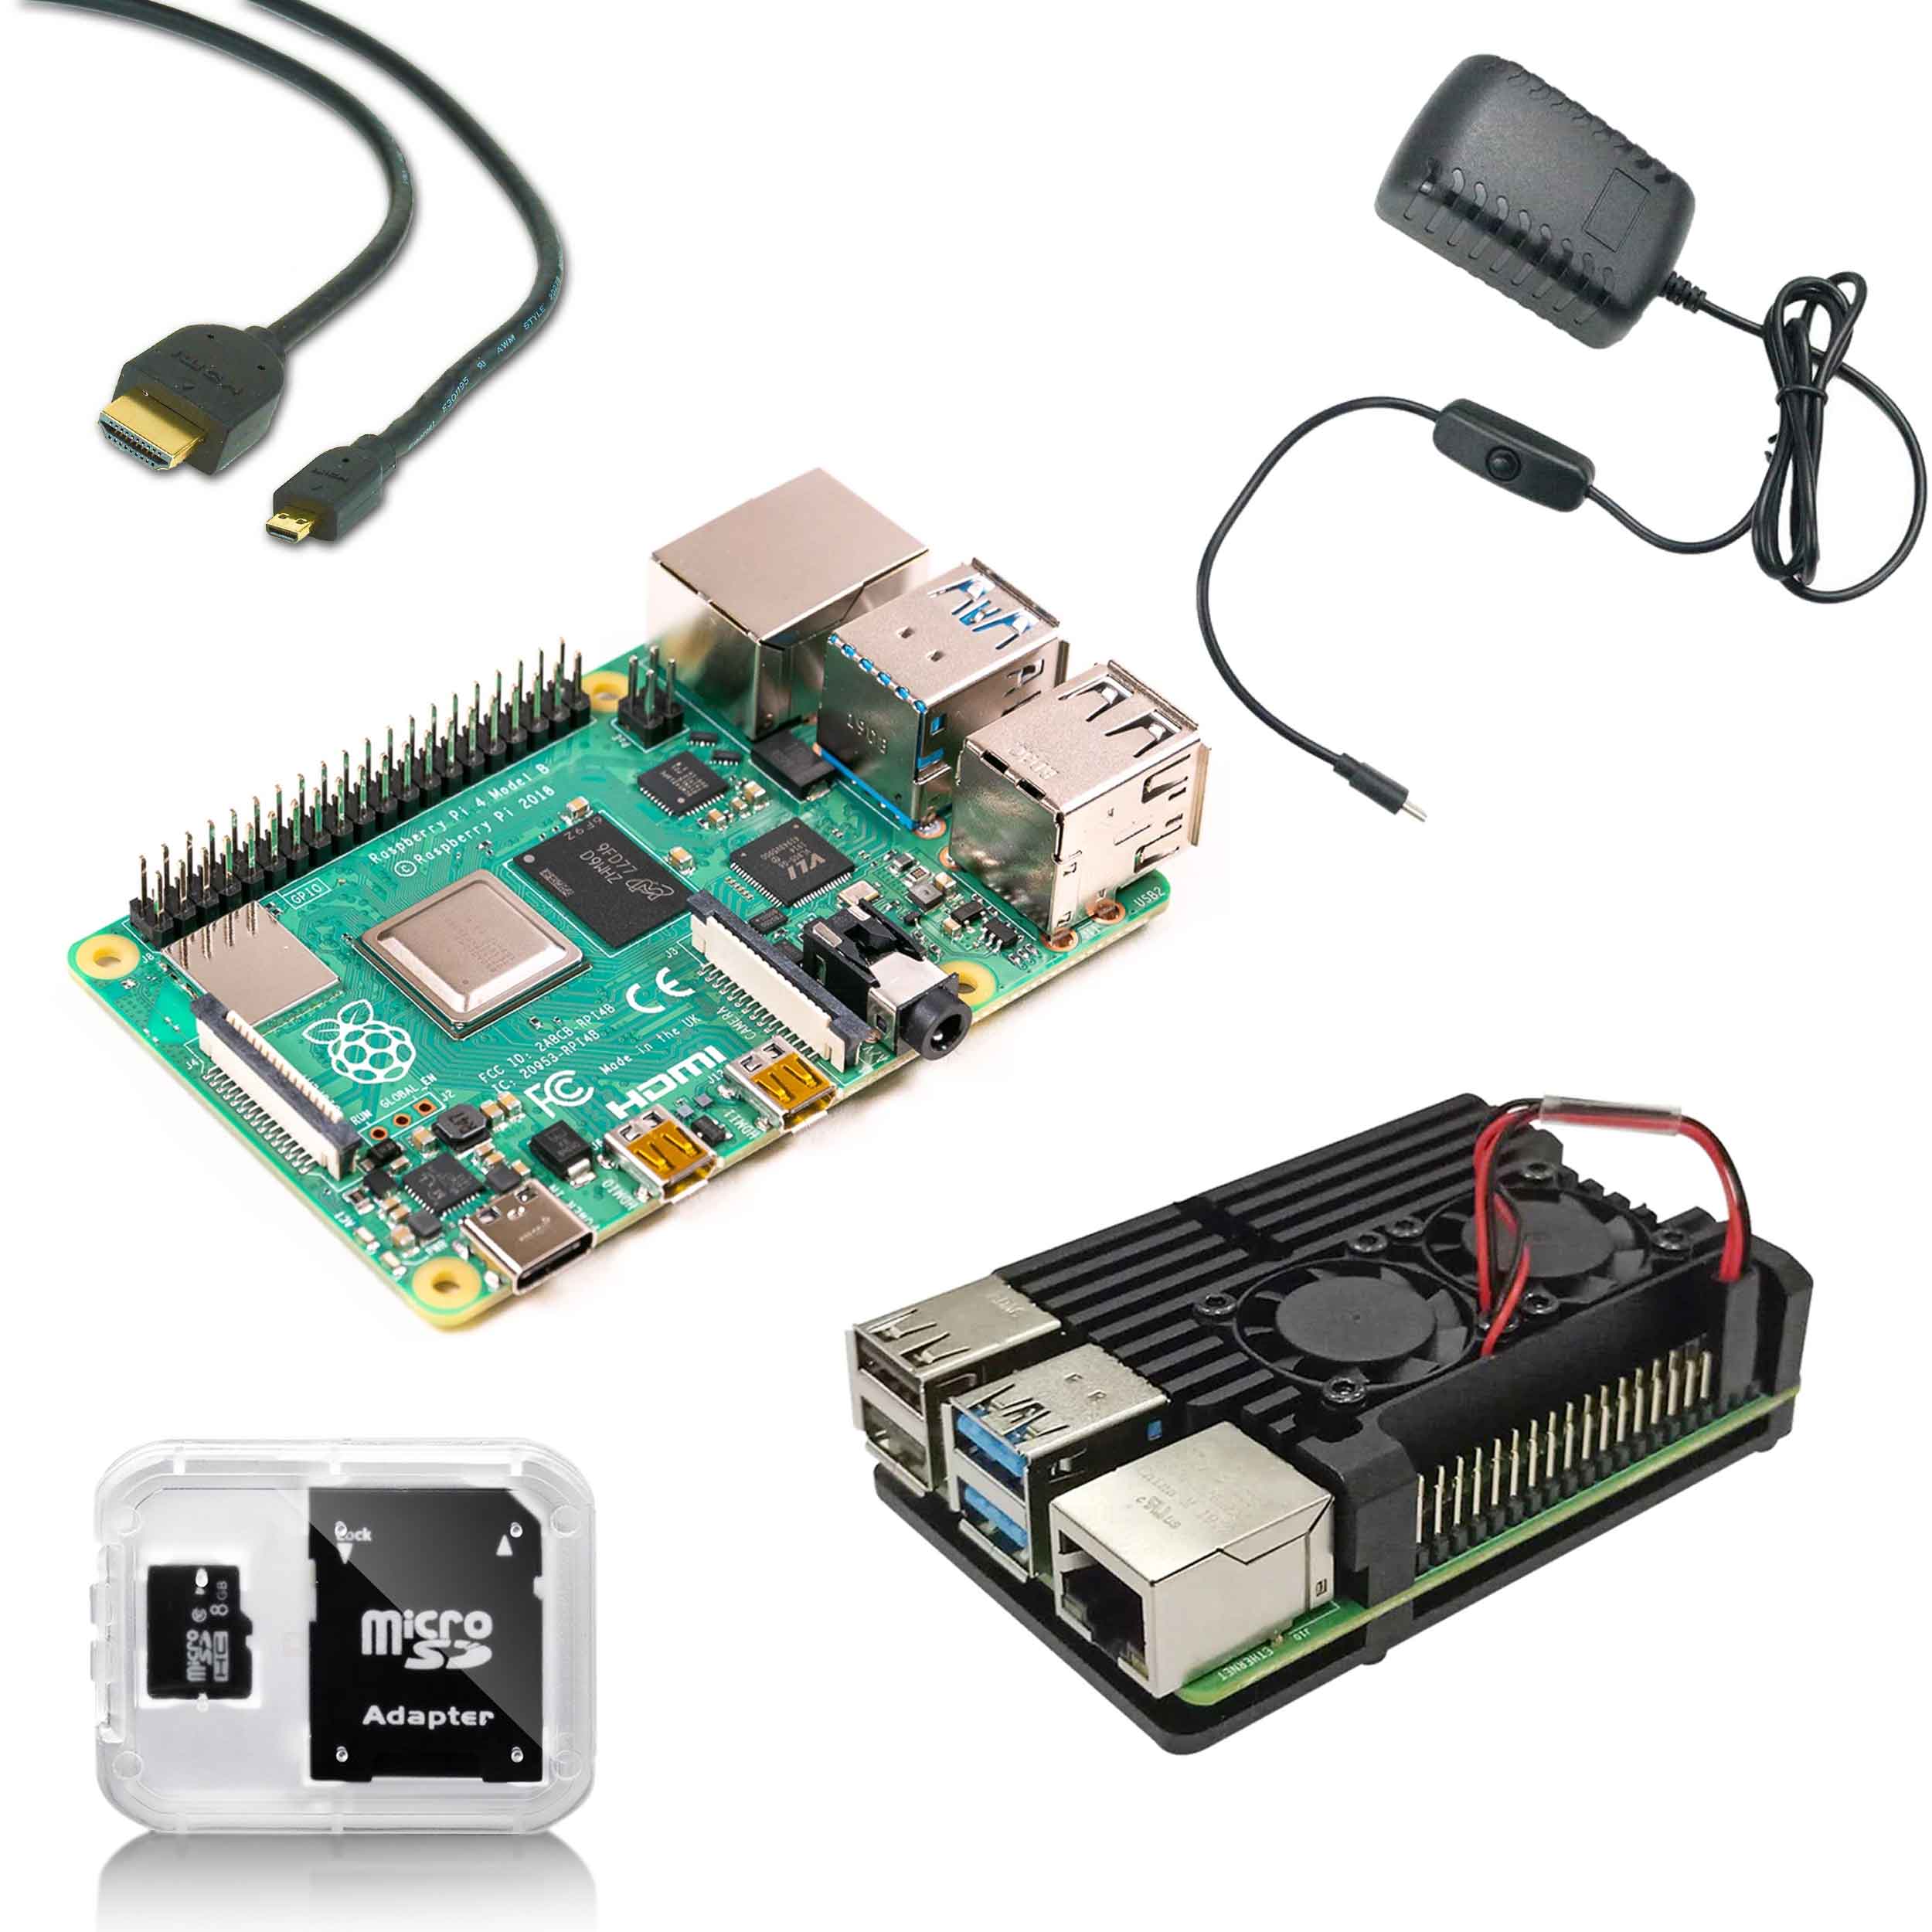 Raspberry Pi 4B Starter Kit - 1GB